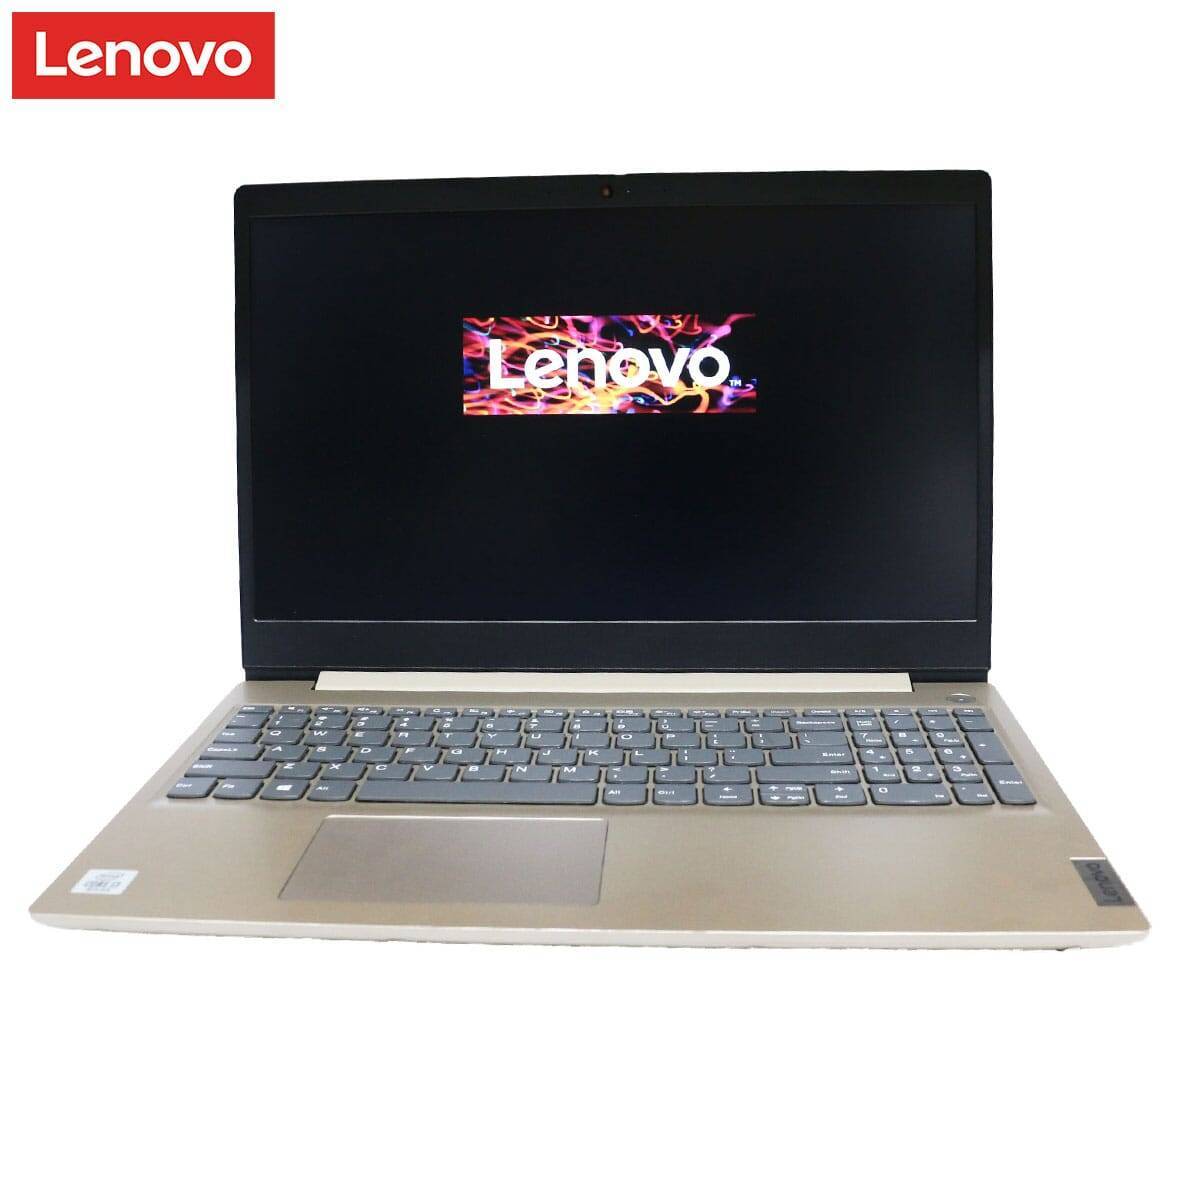 LENOVO 3 15IIL05  Intel I3  10th Gen  4GB RAM  128GB SSD  15.6" Display  Almond Color  180 Rotatable Display